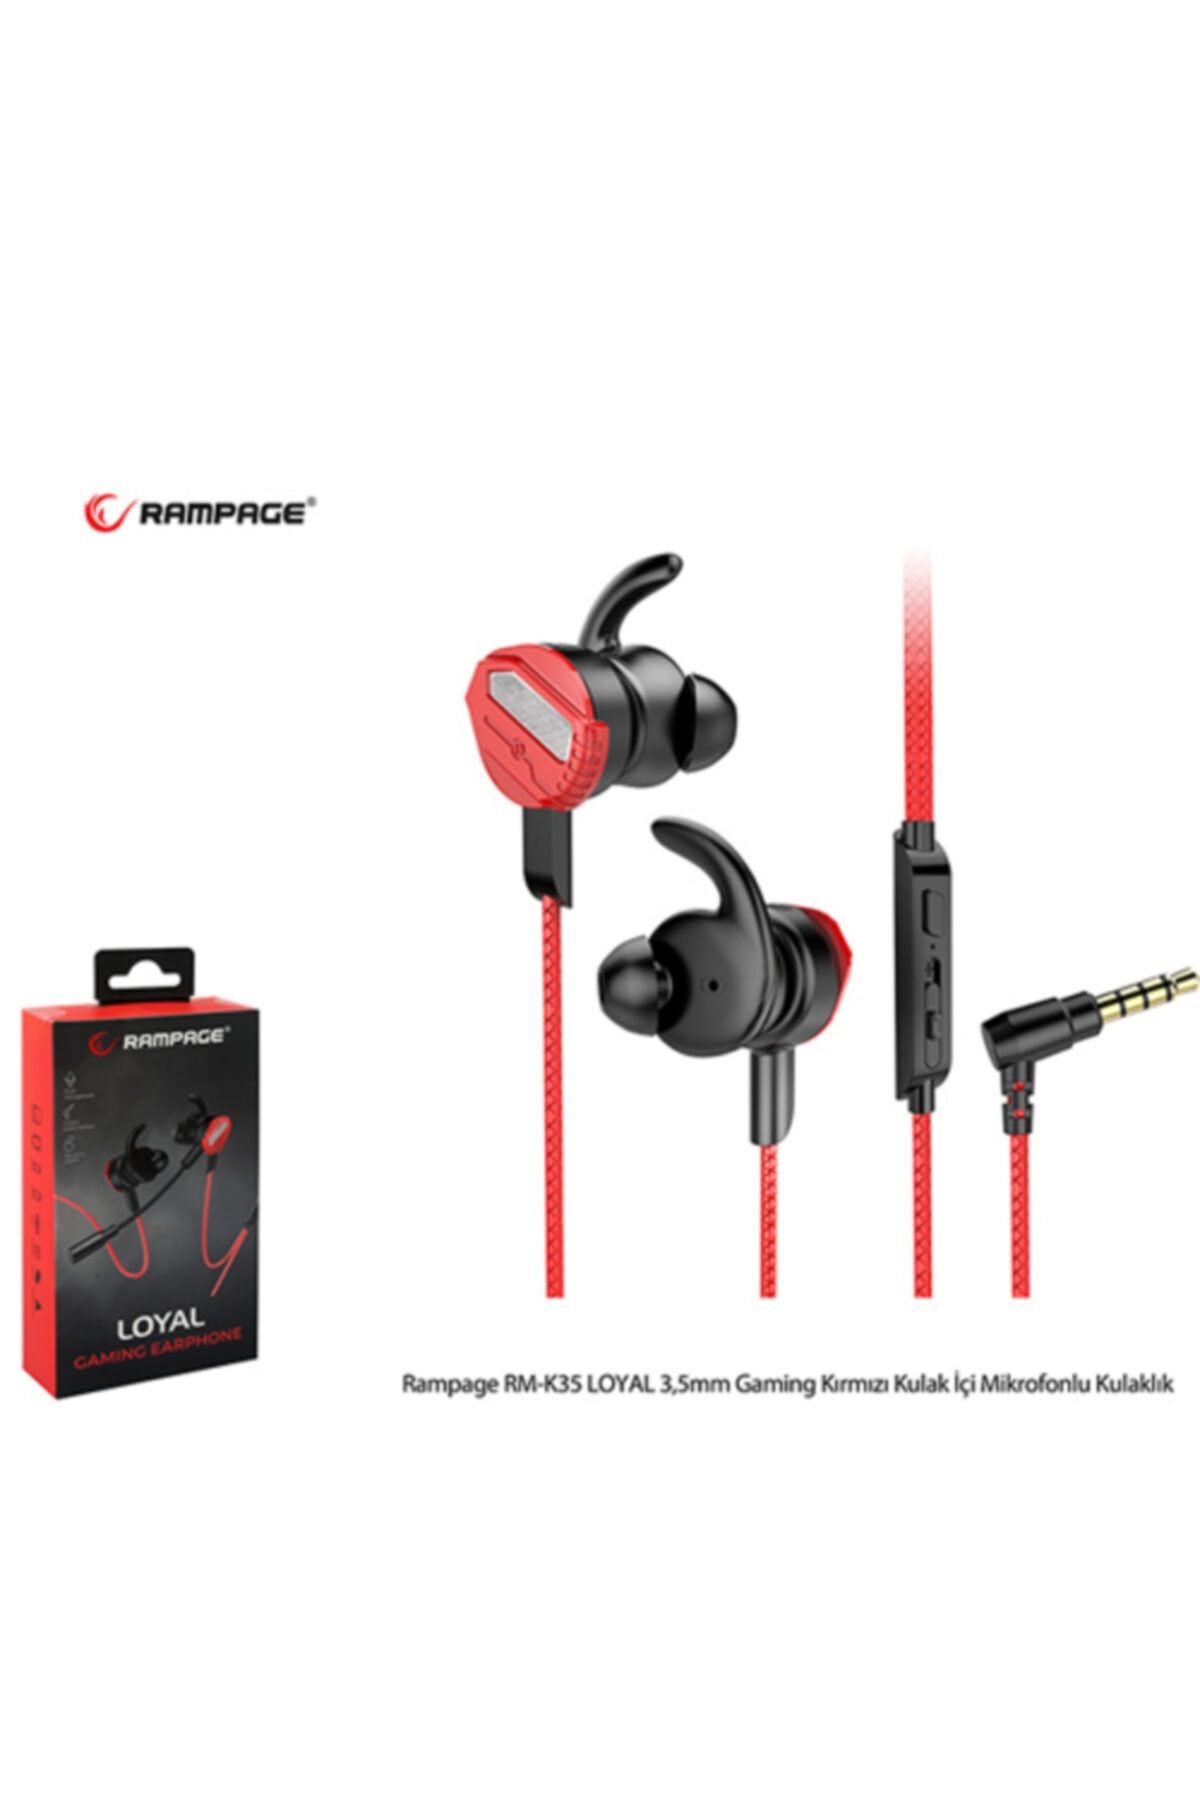 Rampage Rm-k35 Loyal 3,5mm Gaming Kulak Içi Mikrofonlu Kulaklık 2li Hd Mikrofon Özelliği